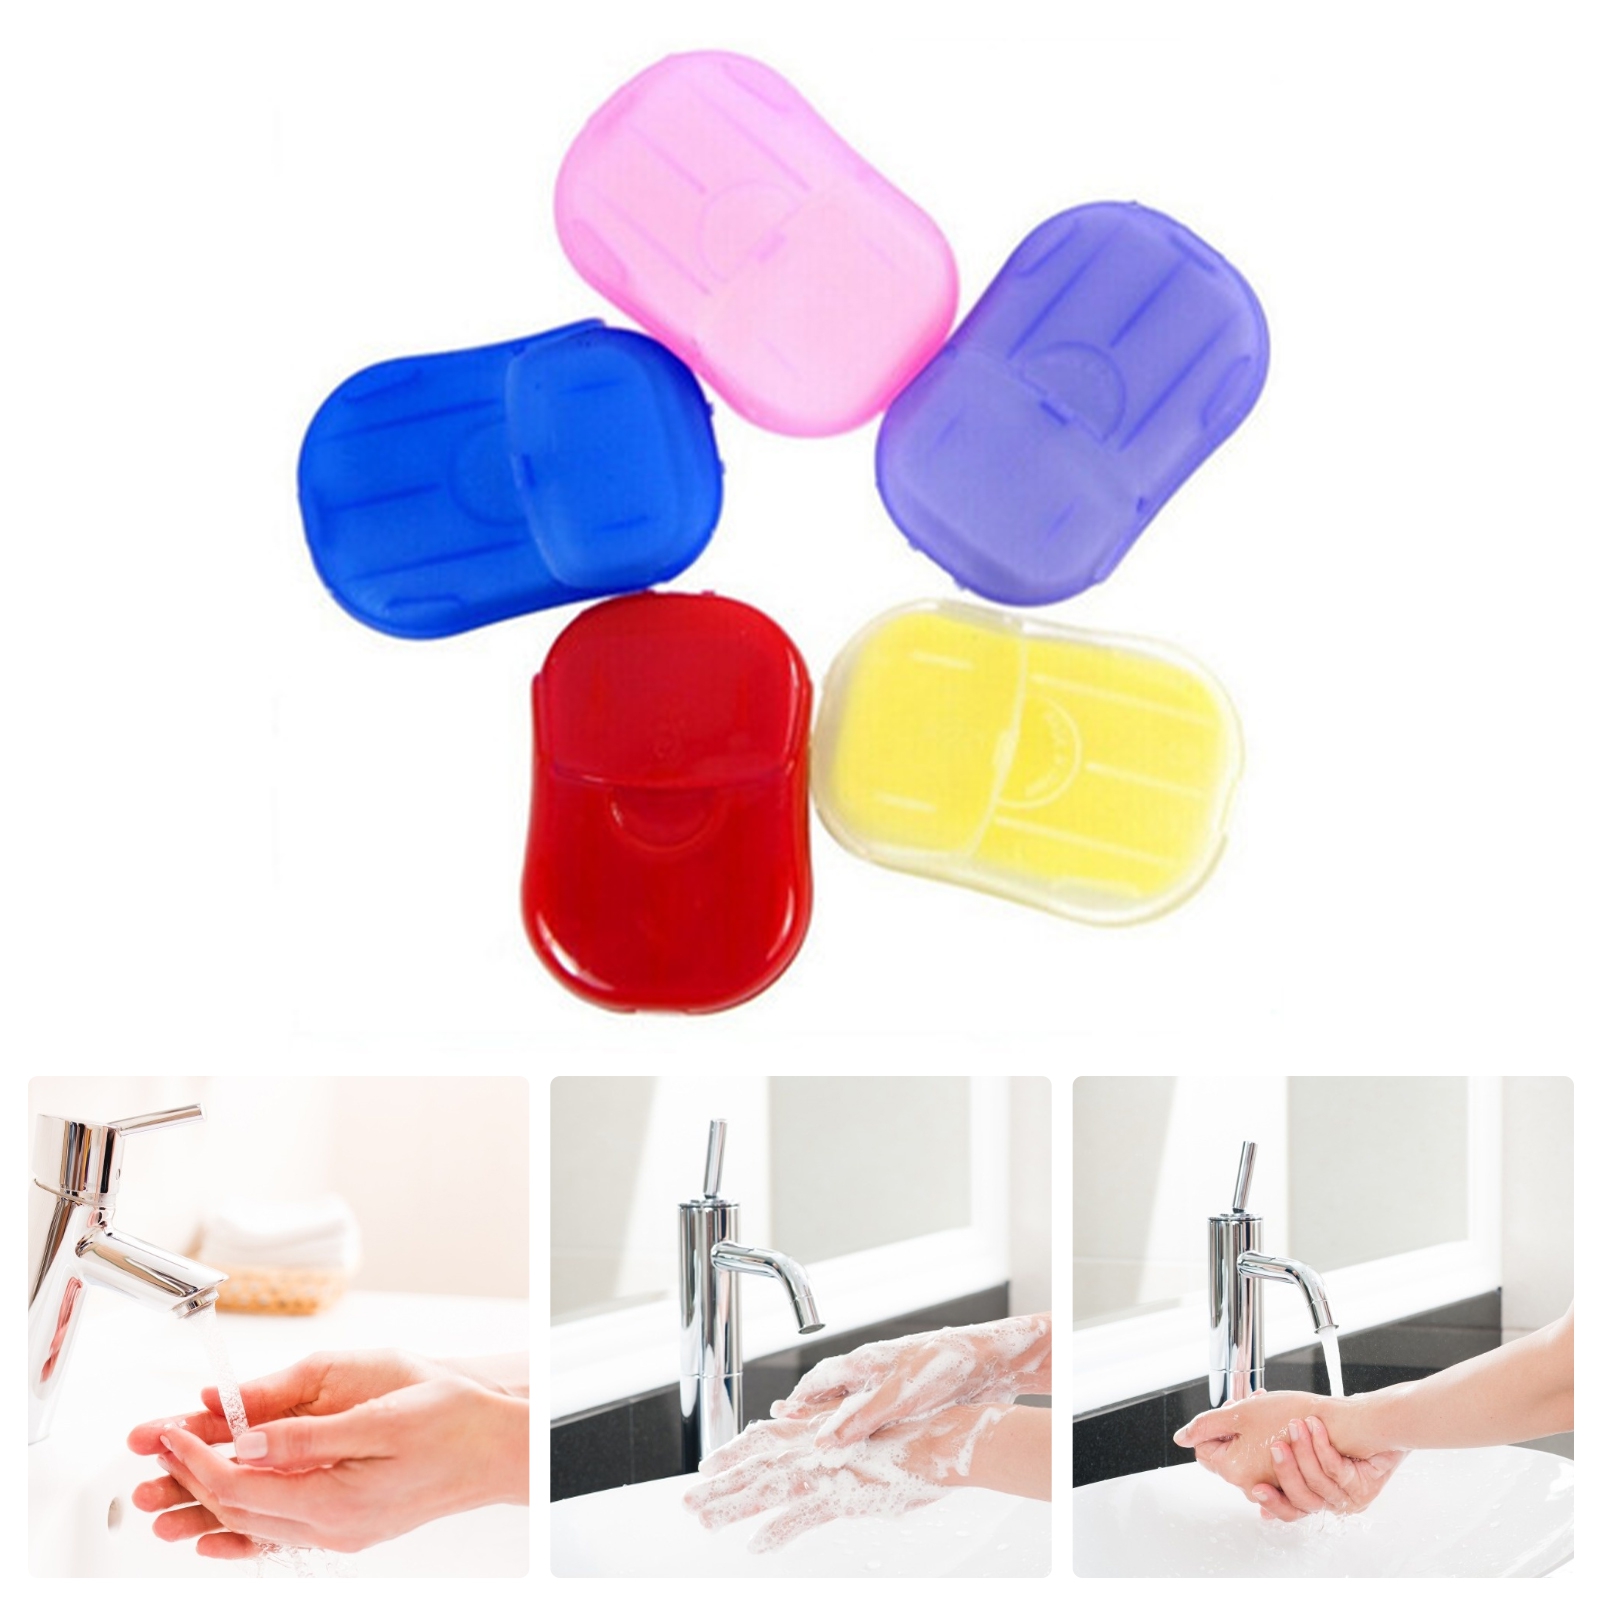 Eco Mini Soap Set for Travel Toiletry